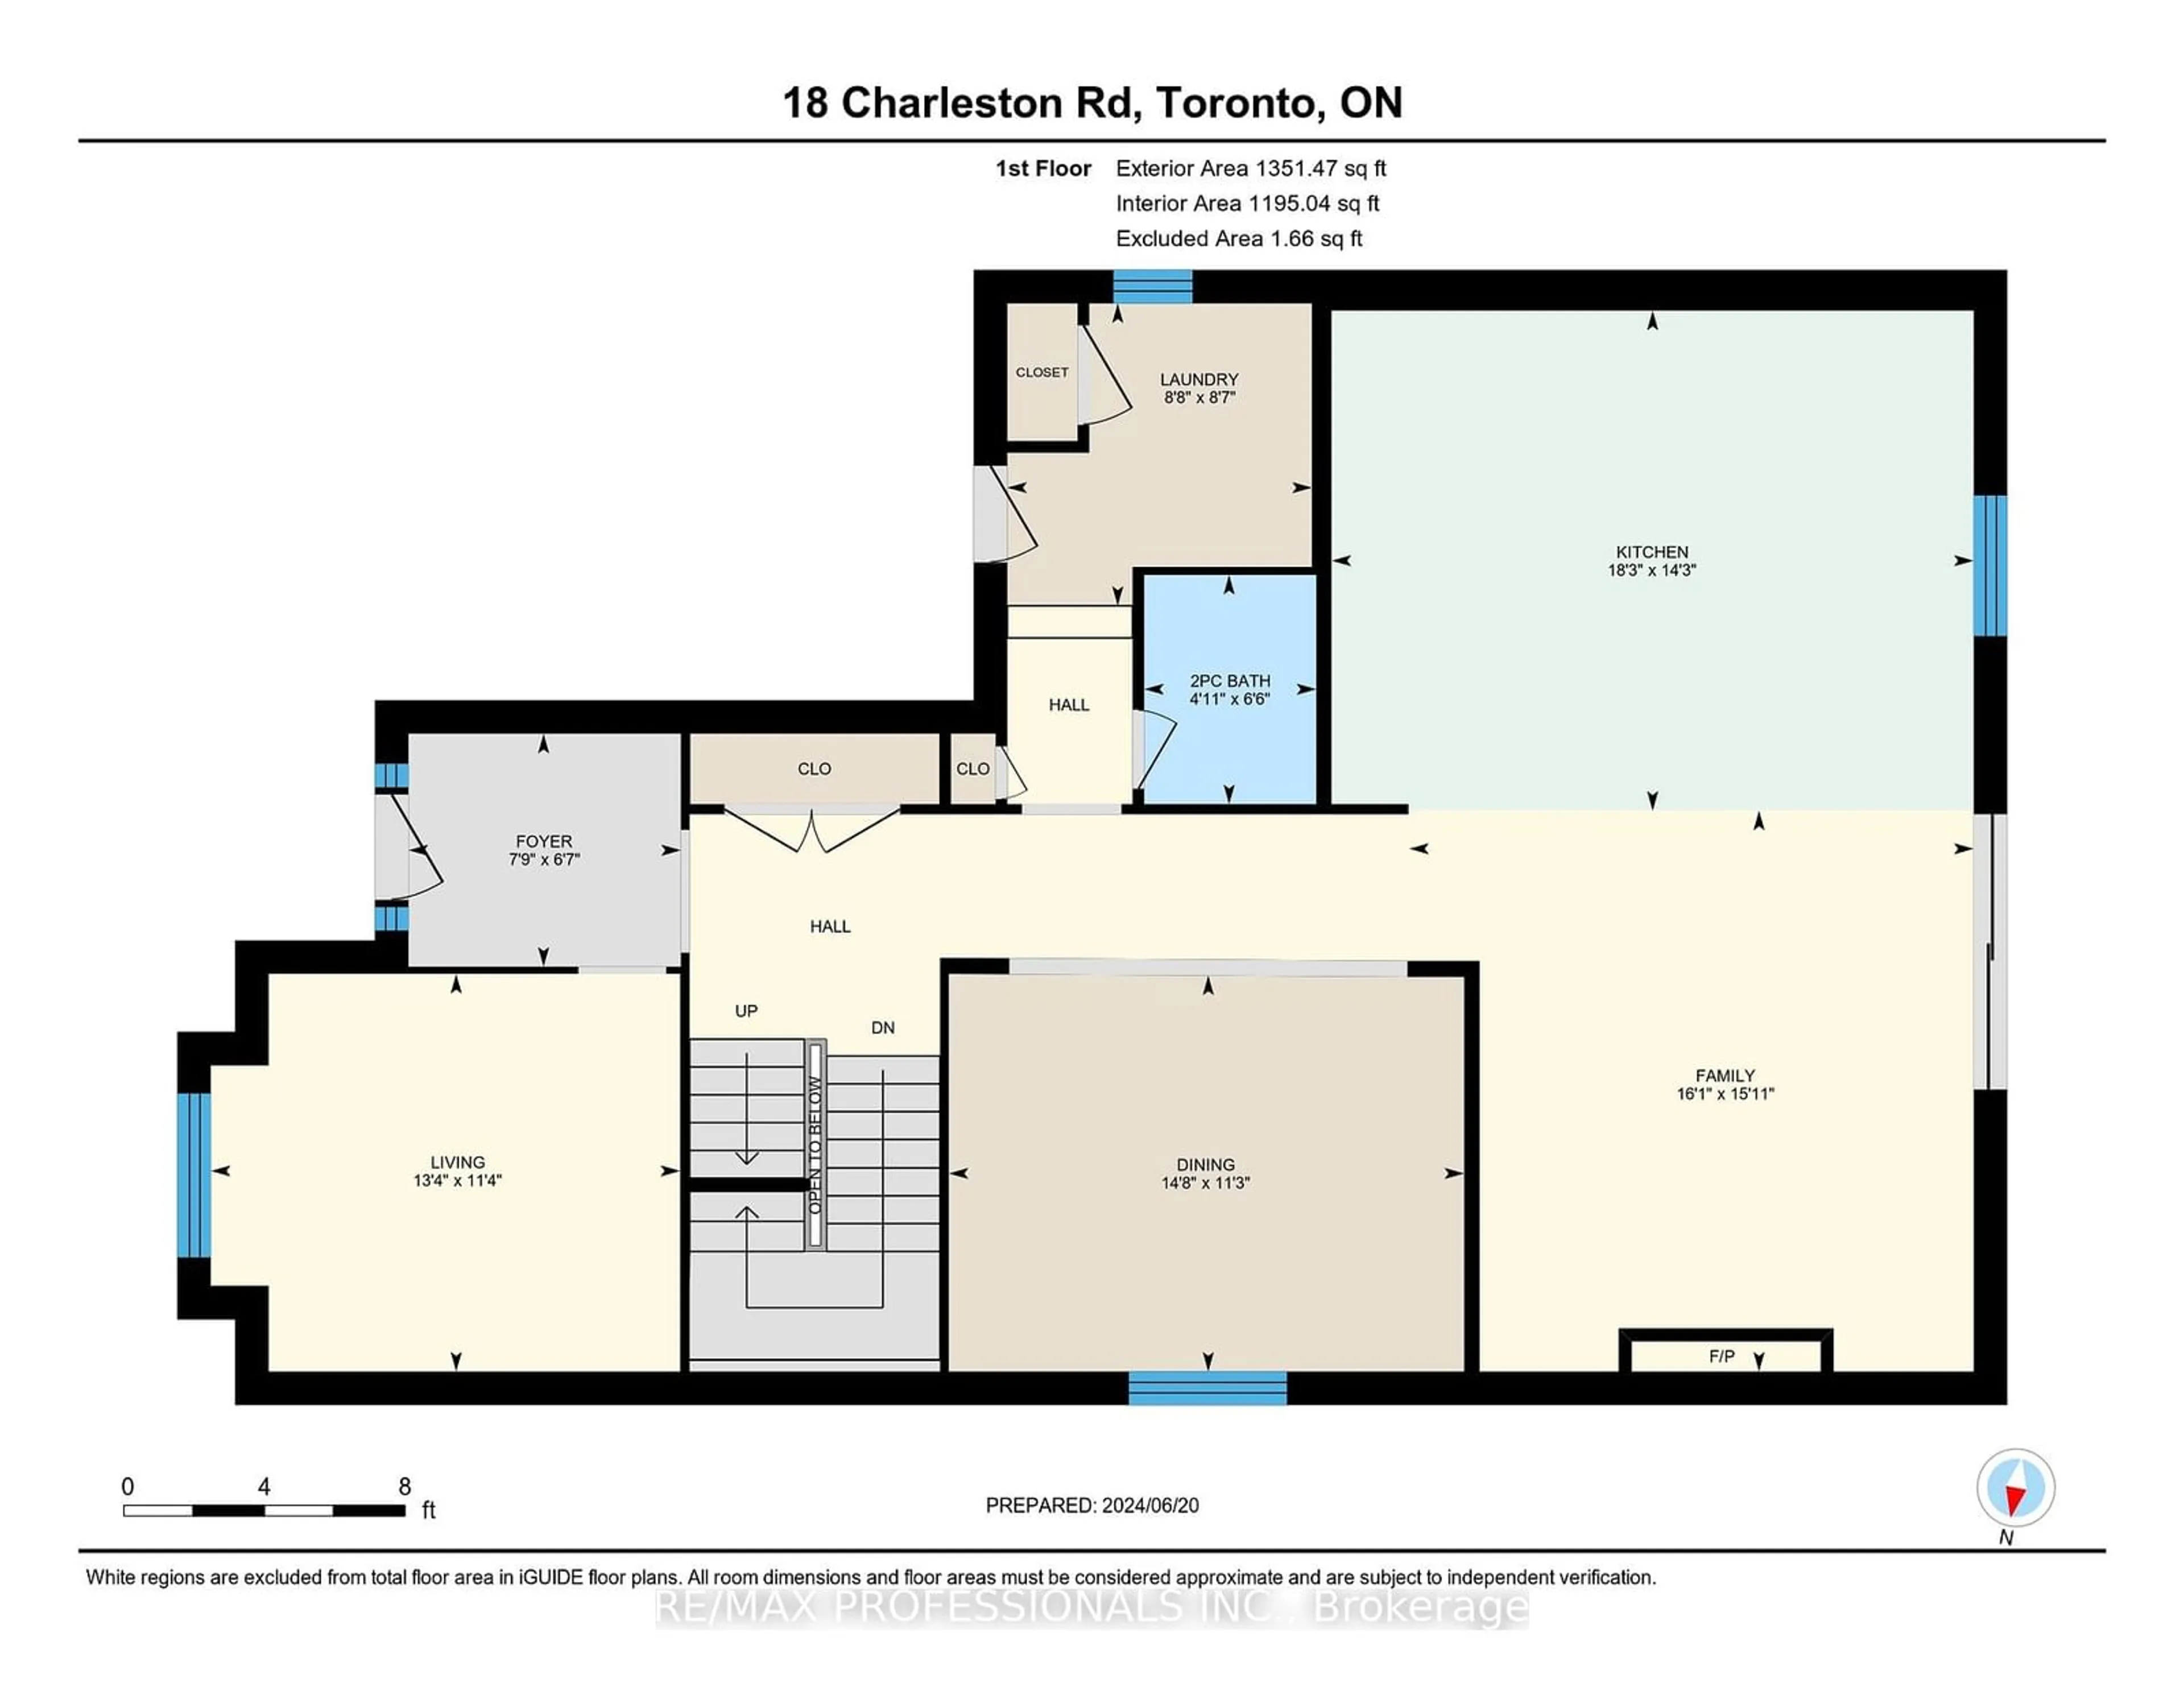 Floor plan for 18 Charleston Rd, Toronto Ontario M9B 4M7